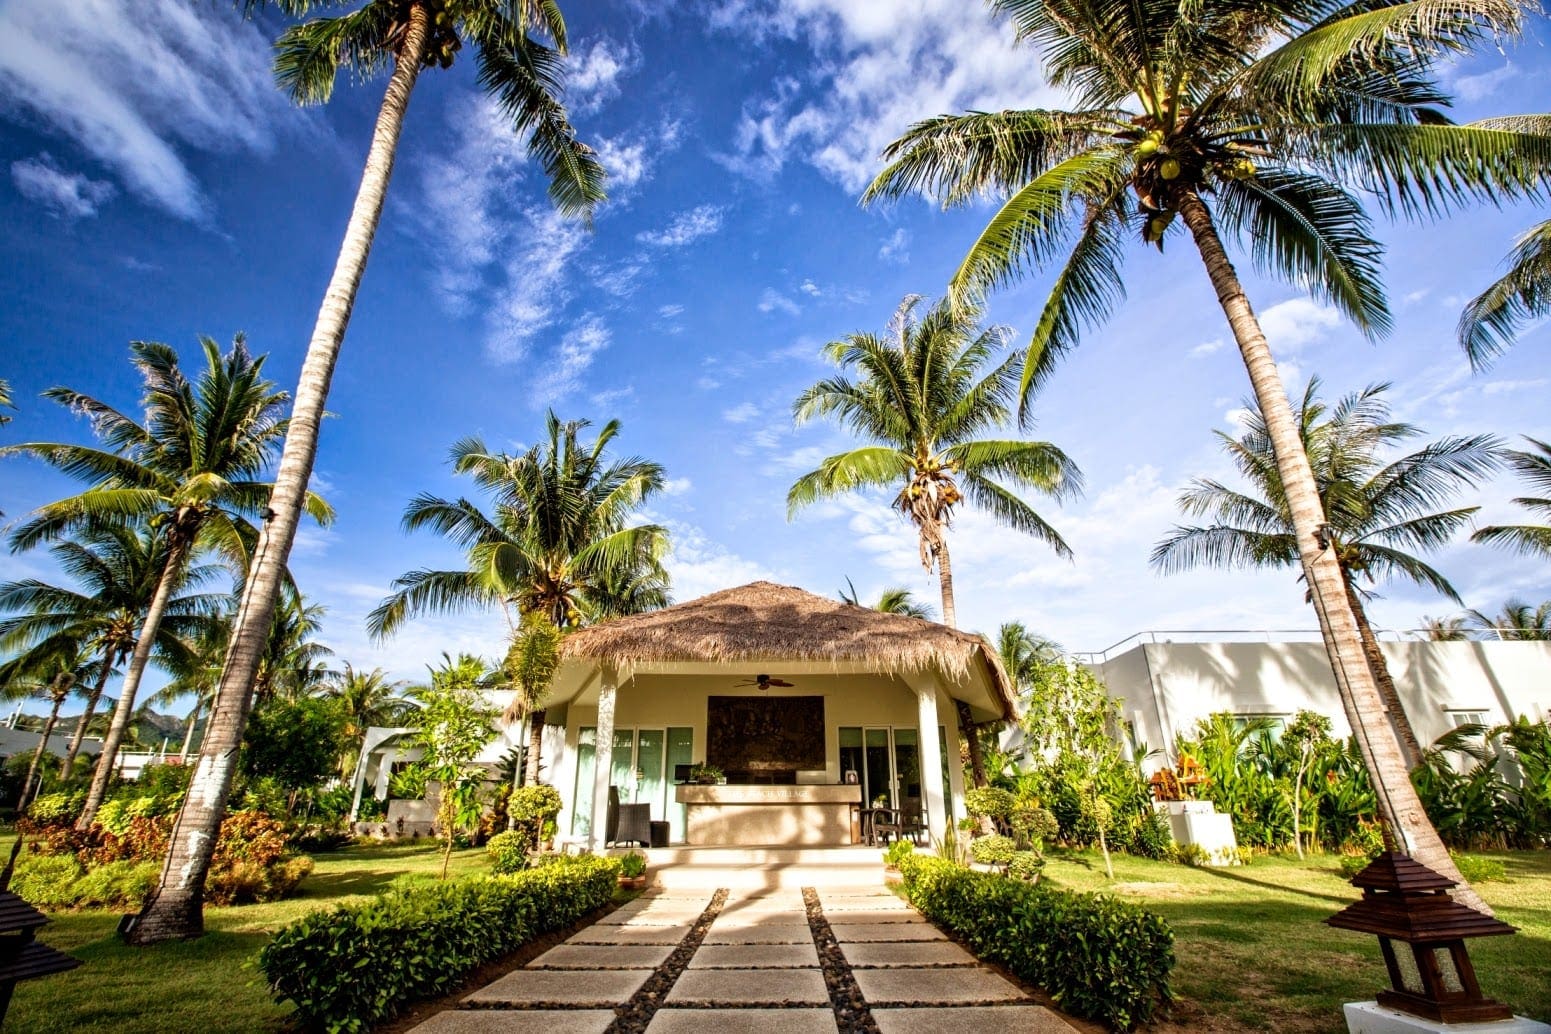 Resortet er bygget med respekt for de mange palmer